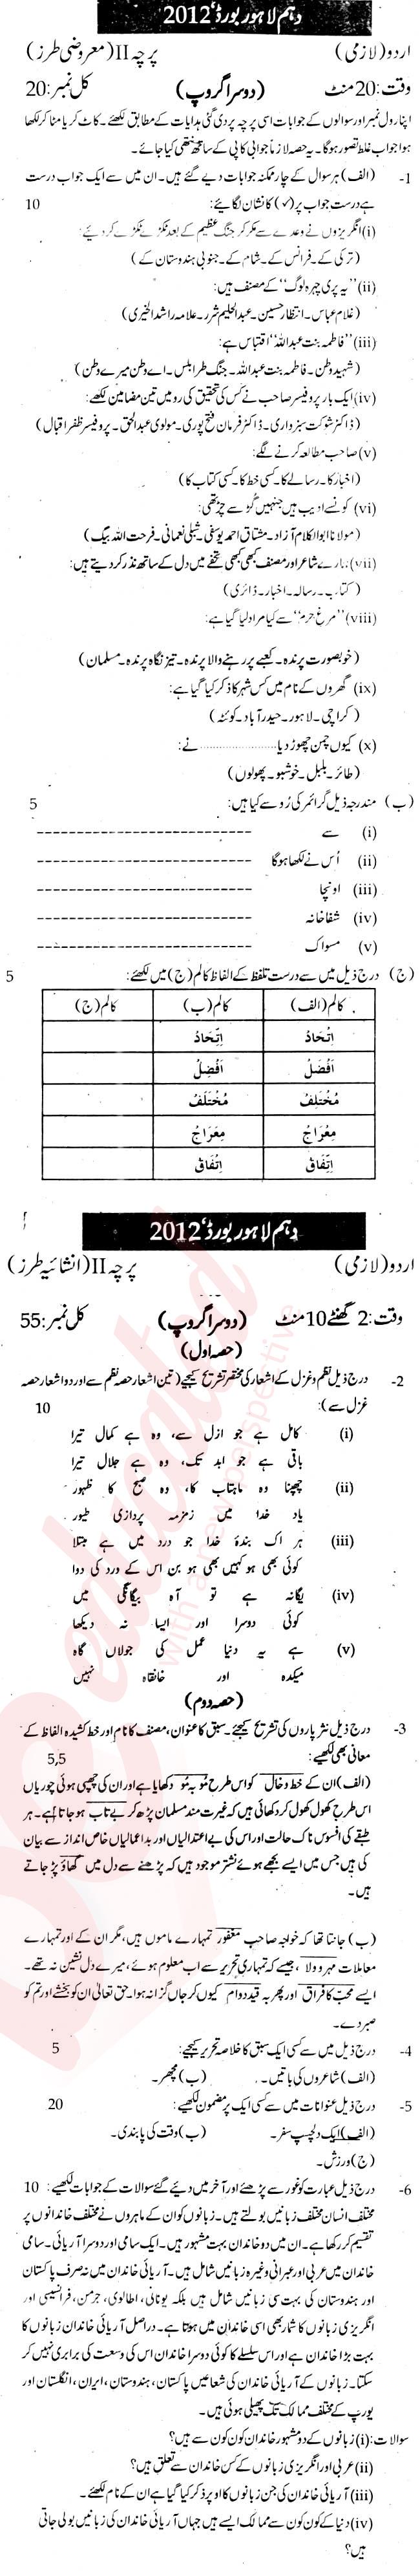 Urdu 10th class Past Paper Group 2 BISE Lahore 2012